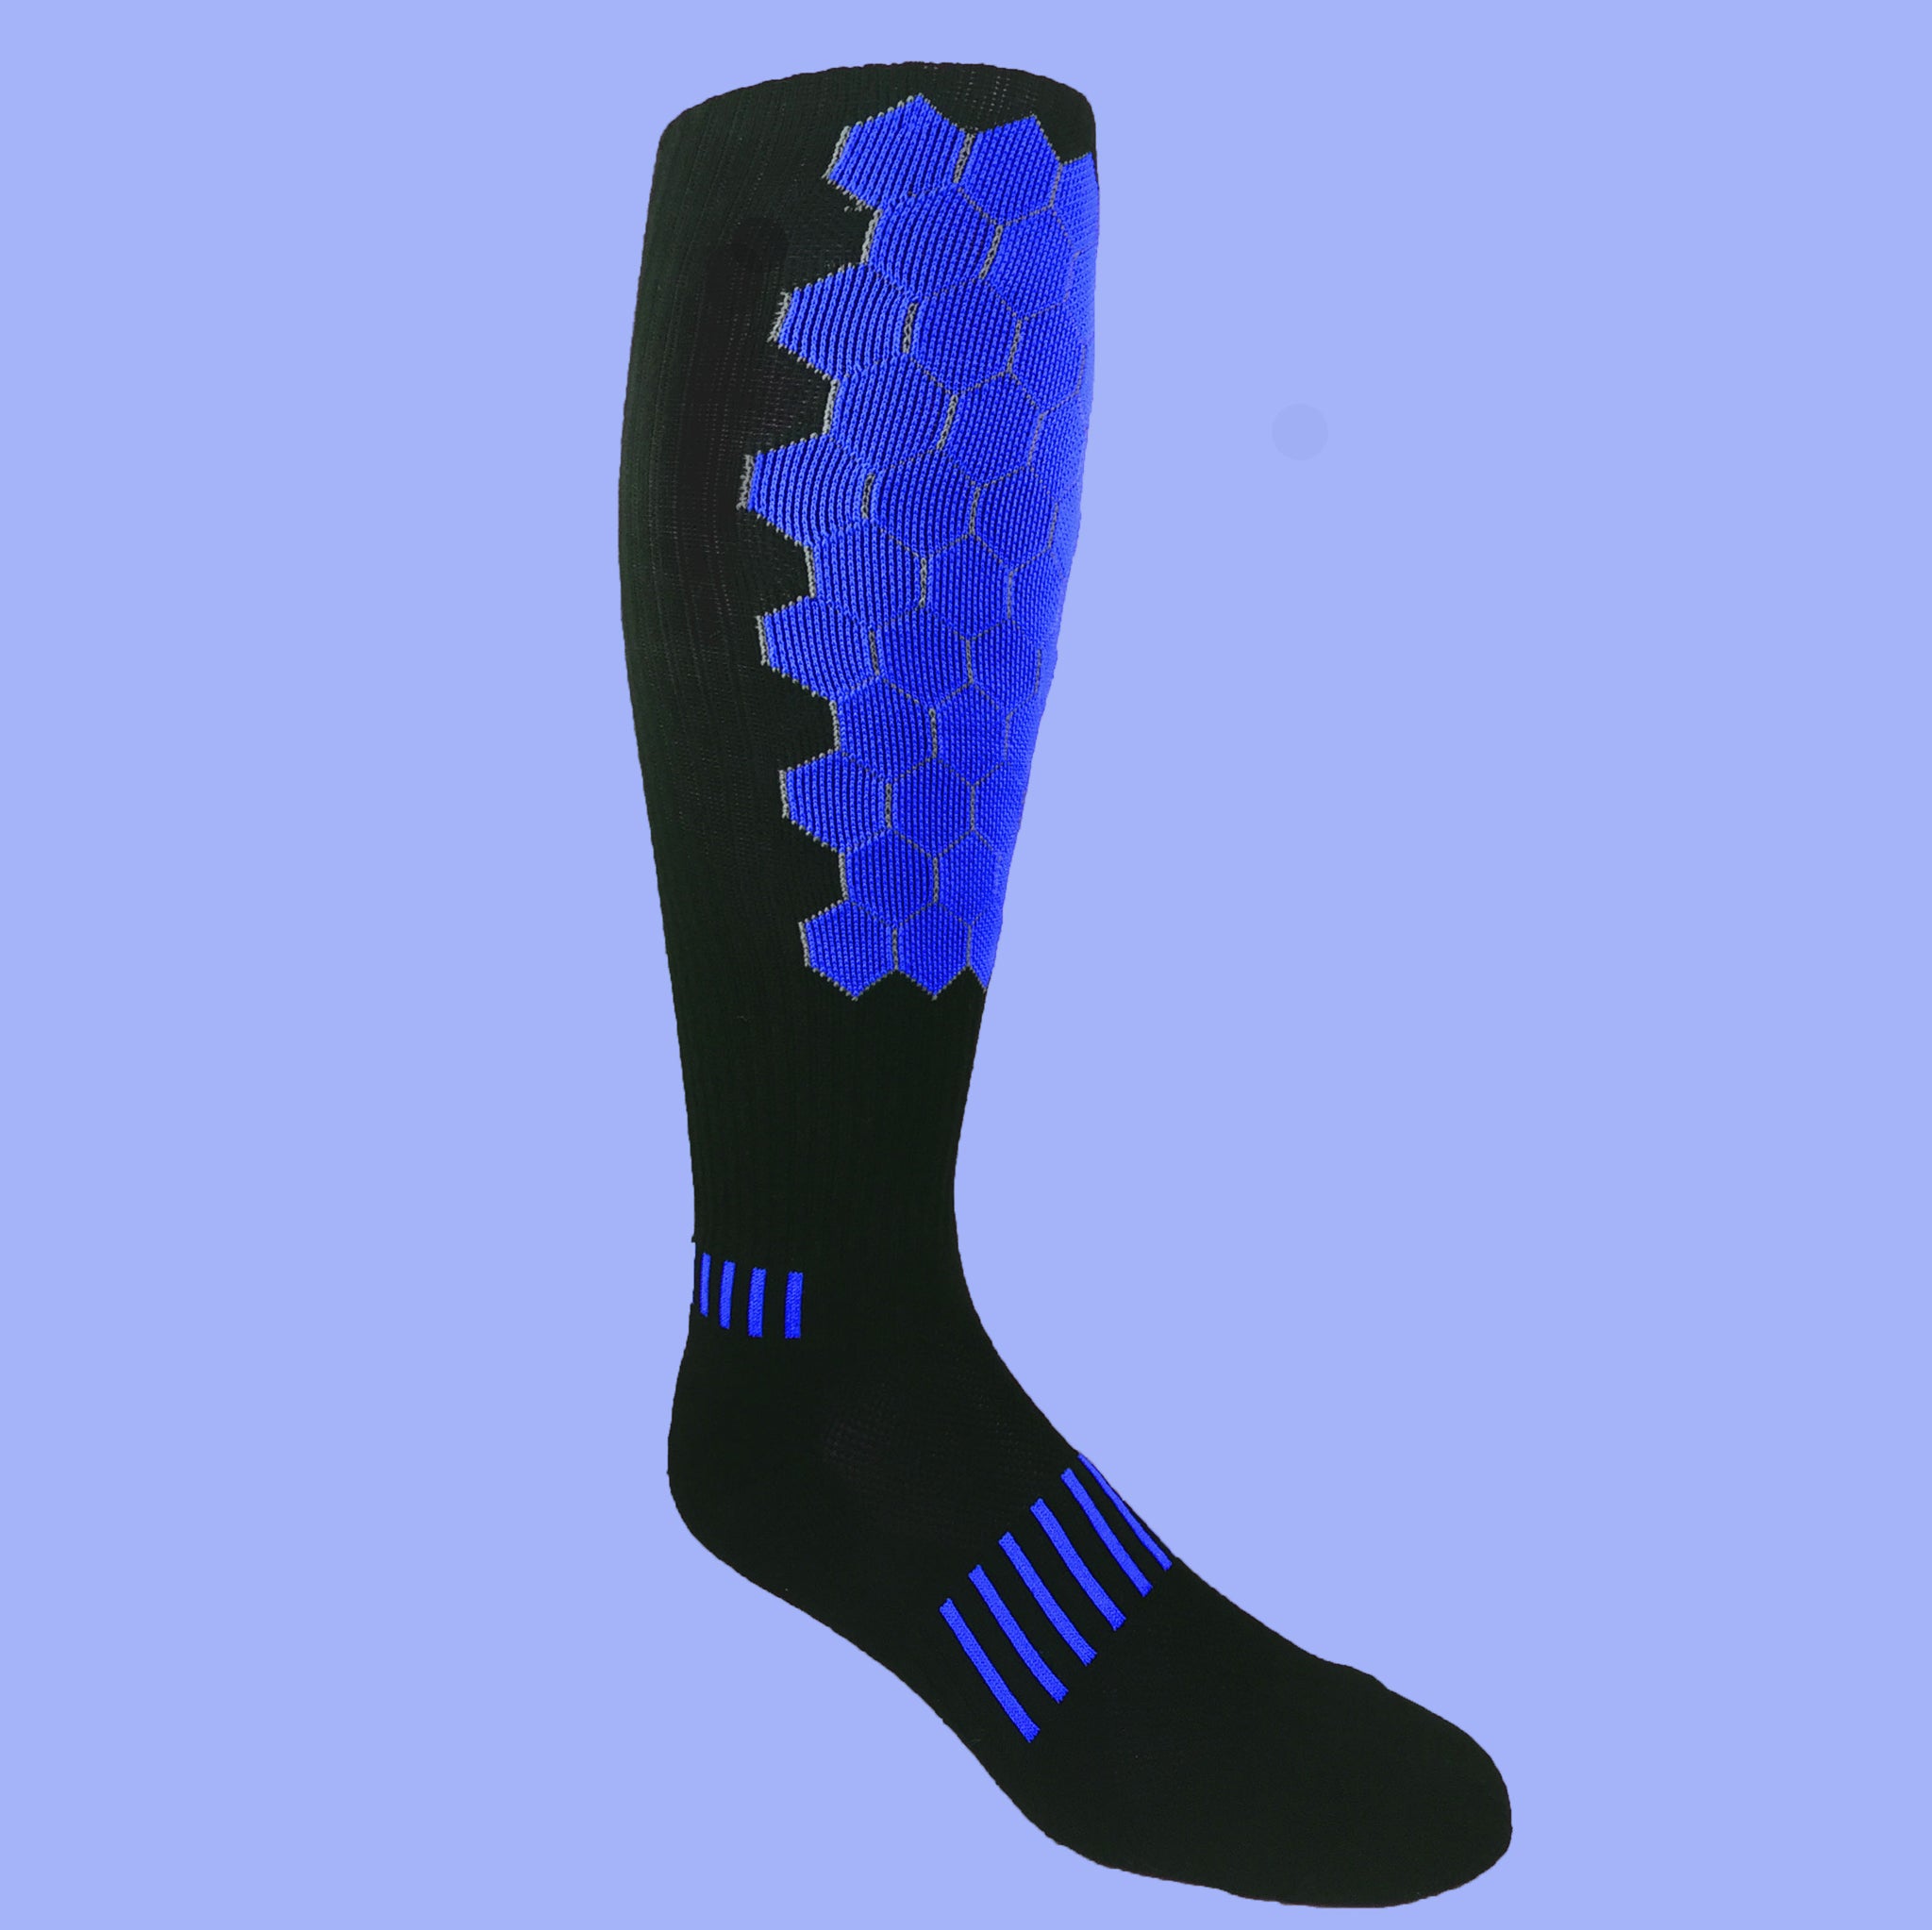 Custom Gym Socks, $9.62 - $12.50 per pair